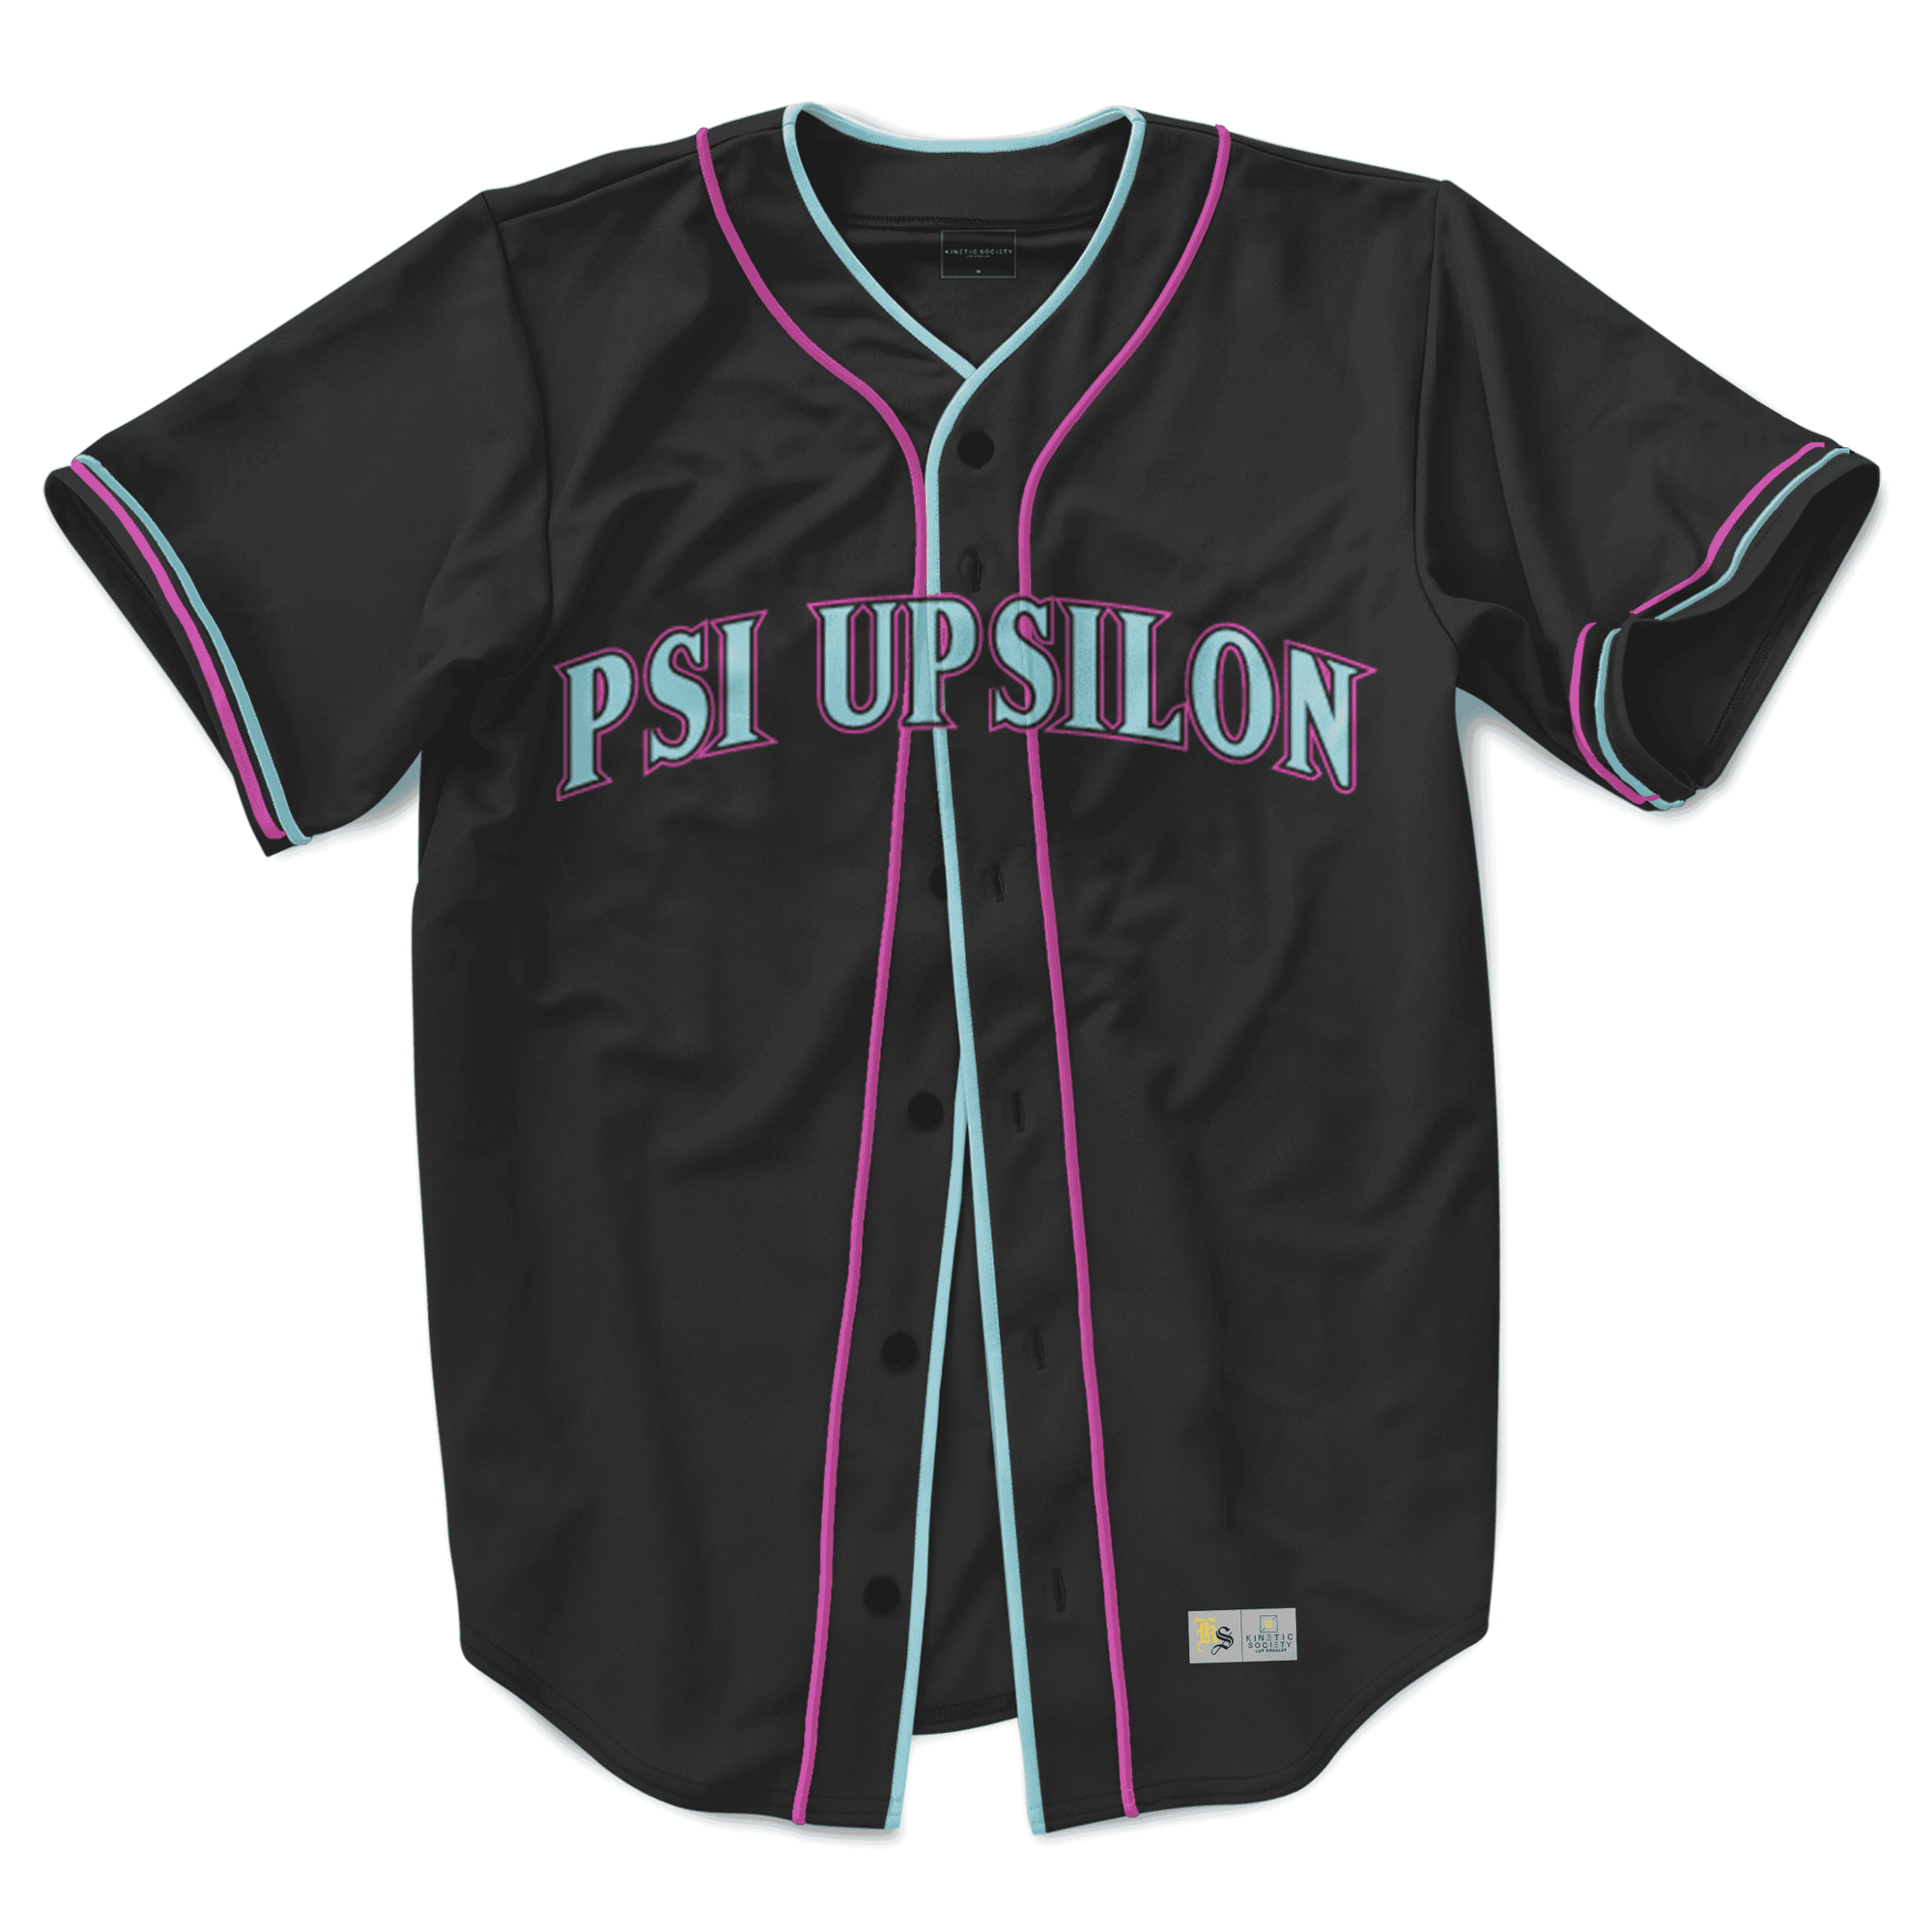 Psi Upsilon - Neo Nightlife Baseball Jersey